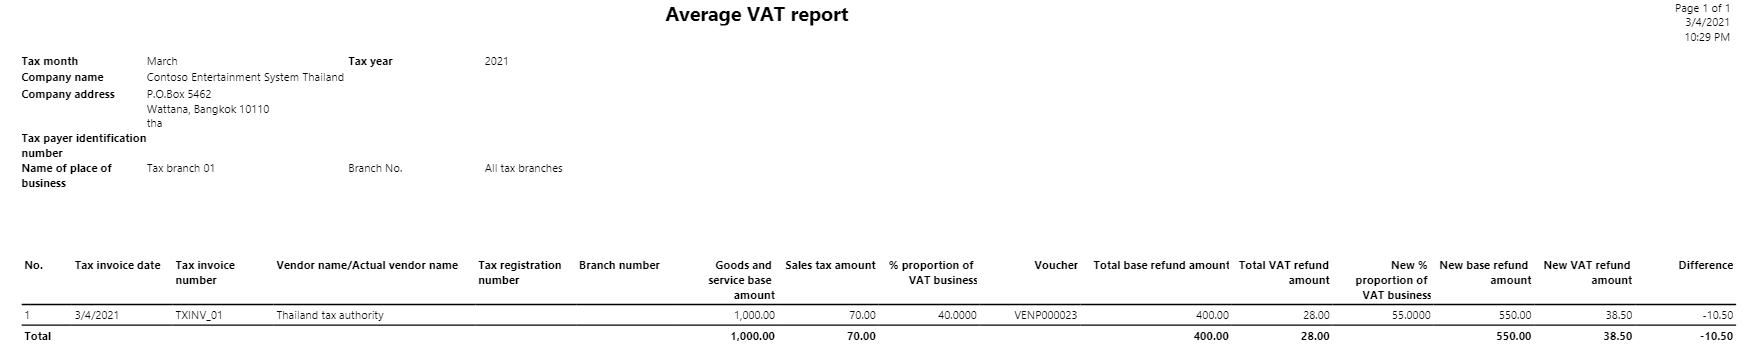 Average VAT report.